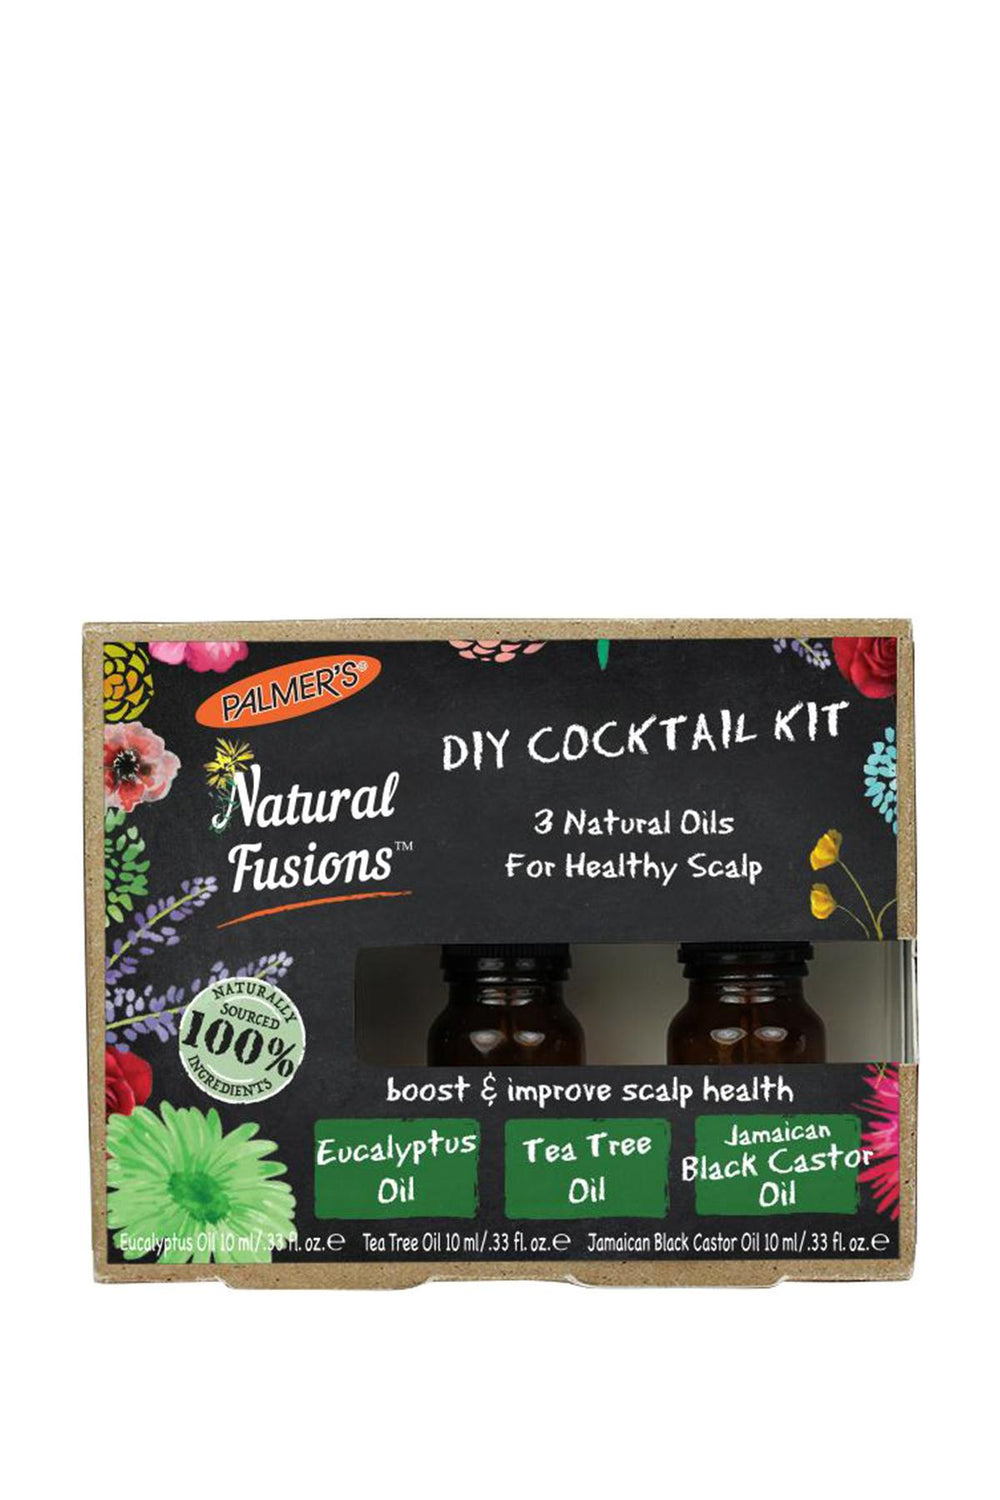 Palmer's Healthy Scalp DIY Cocktail Kit